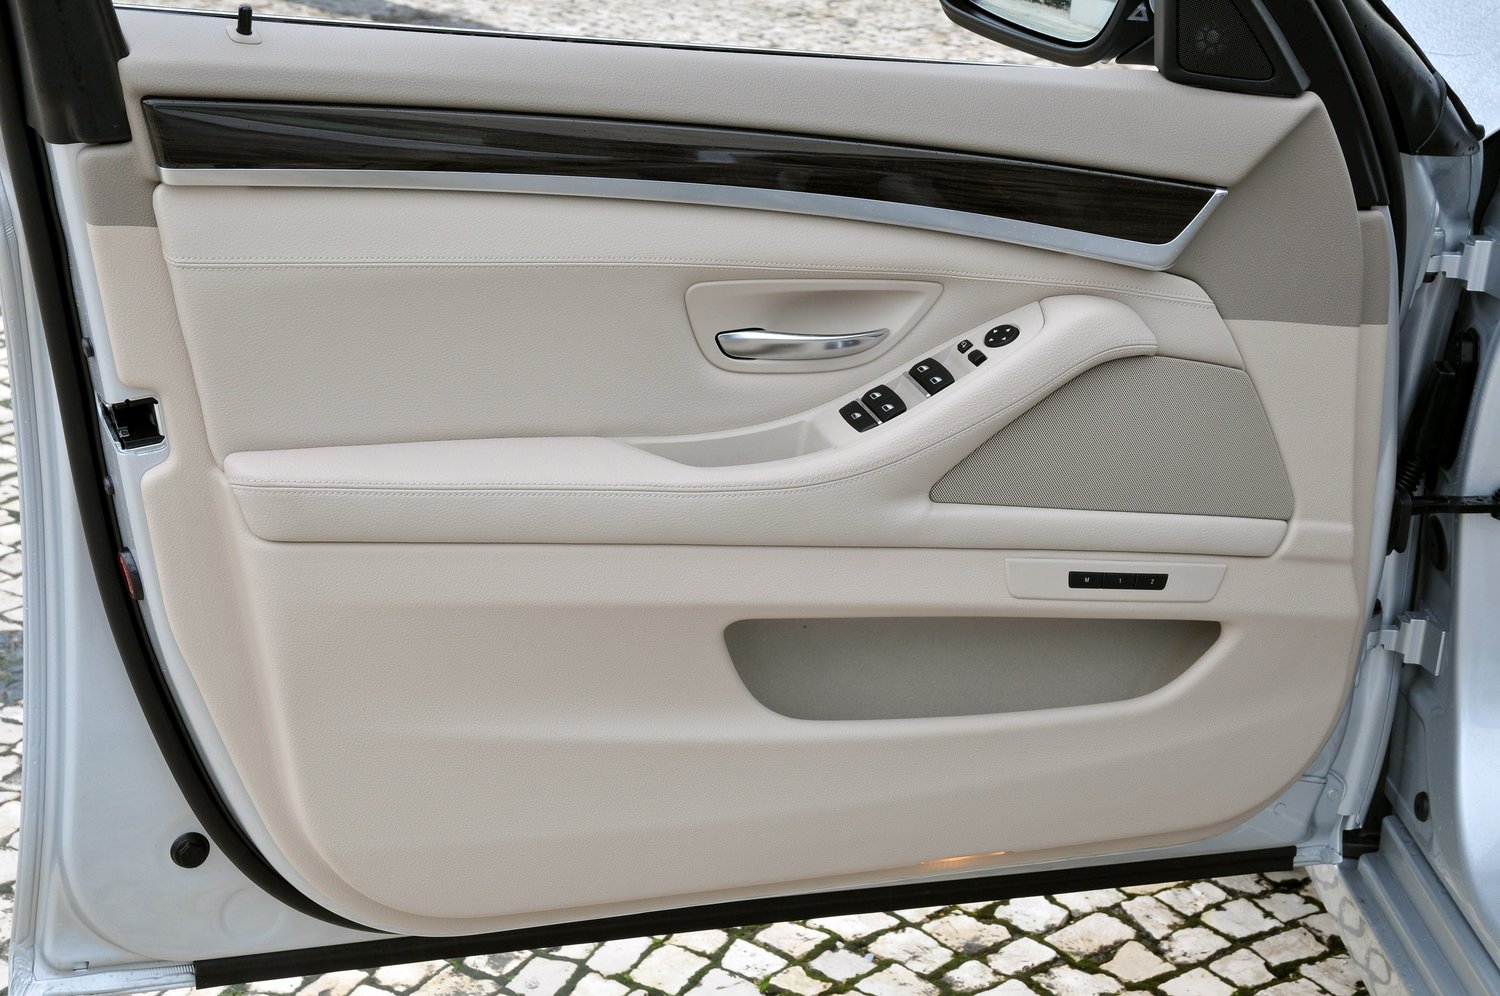 седан BMW 5er 2010 - 2013г выпуска модификация 2.5 AT (204 л.с.)